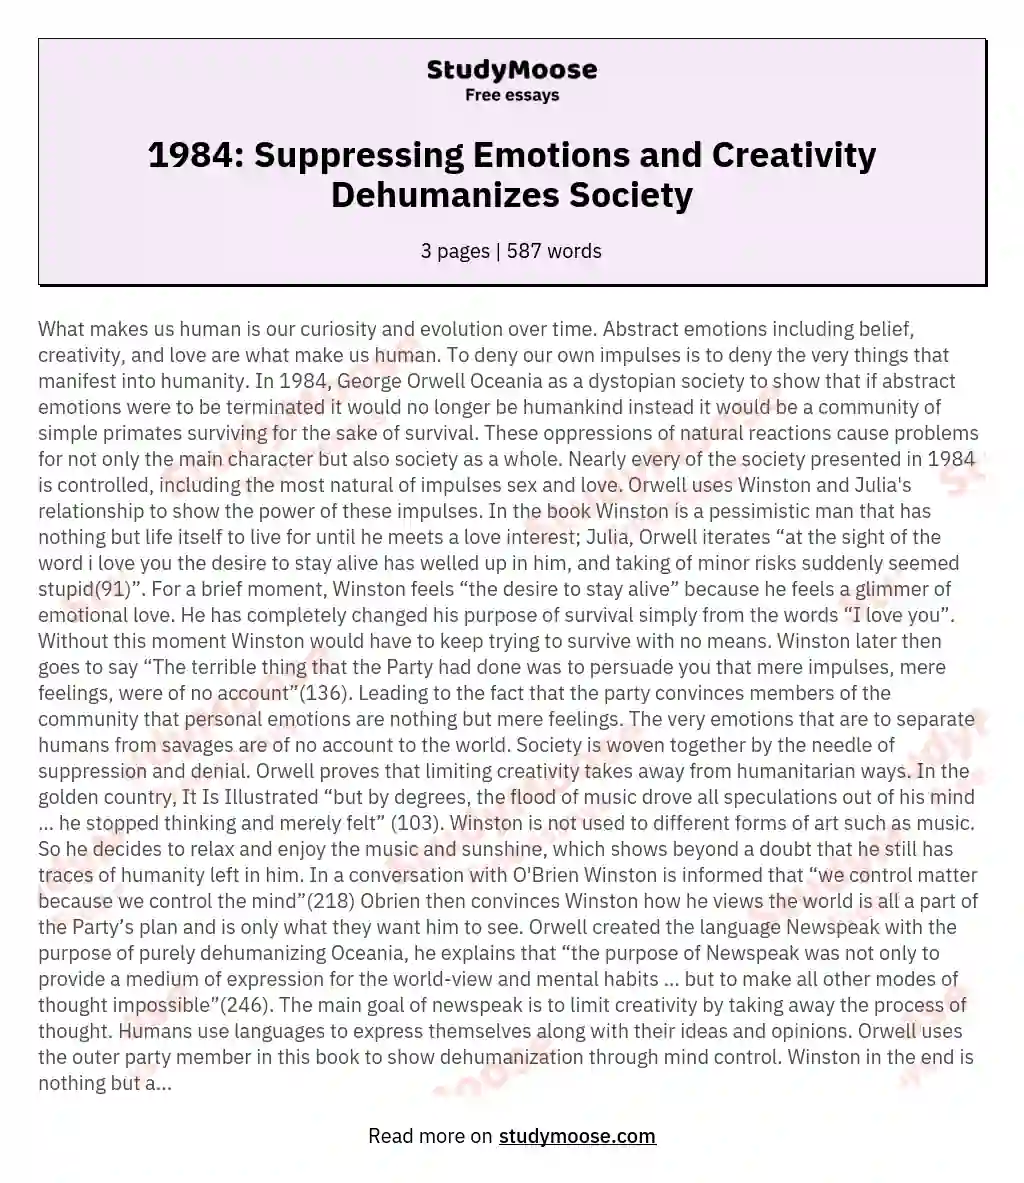 1984: Suppressing Emotions and Creativity Dehumanizes Society essay